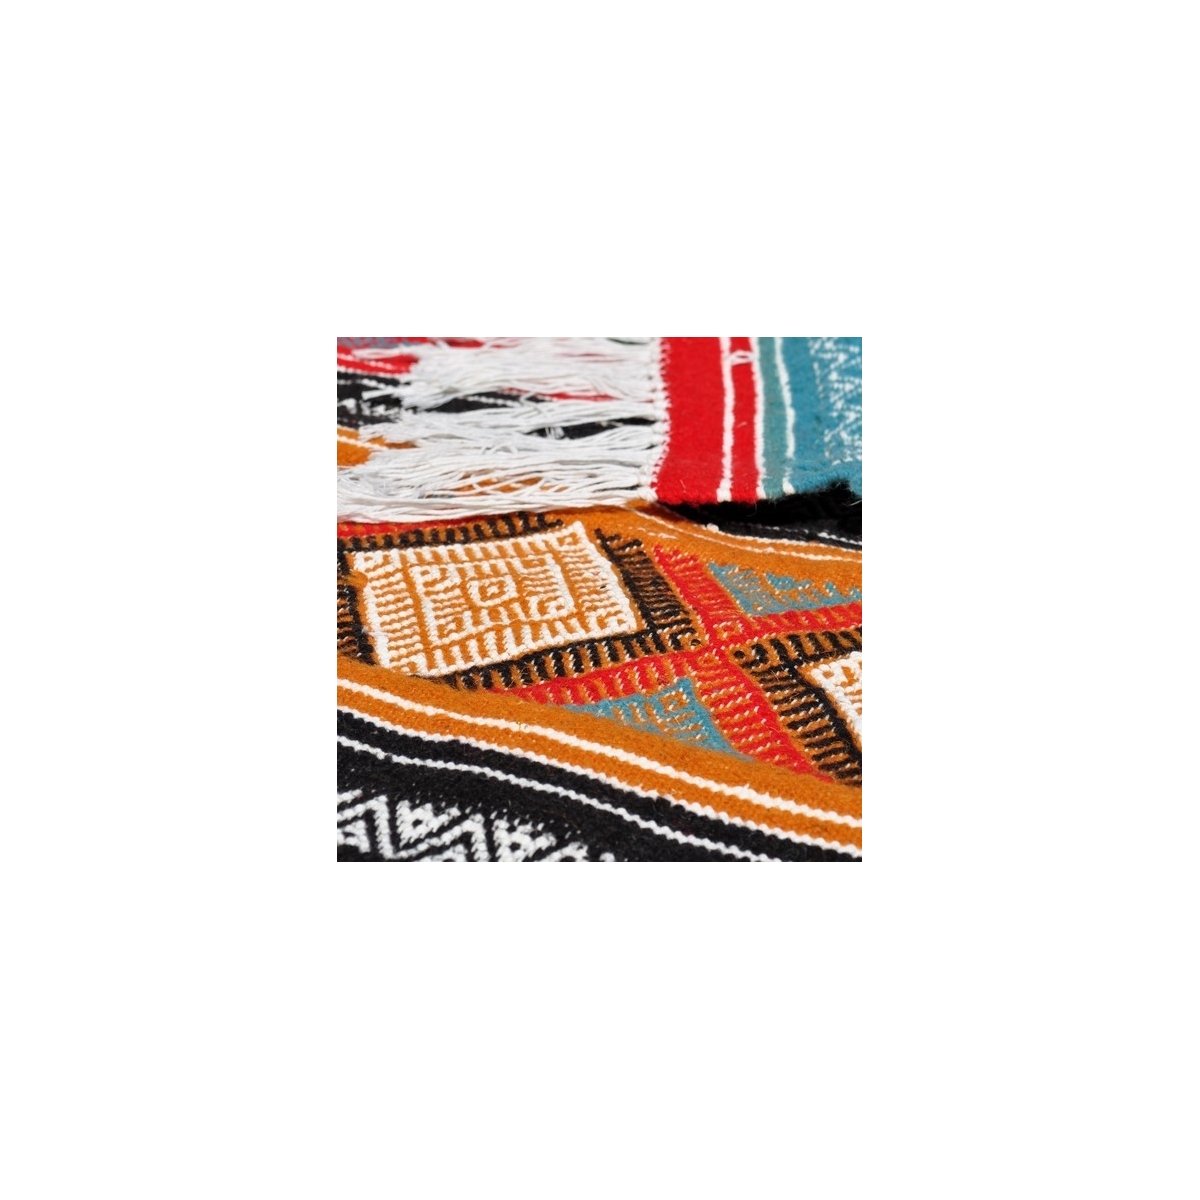 Tapete berbere Tapete Kilim longo Kesra 65x205 Multicor (Tecidos à mão, Lã) Tapete tunisiano kilim, estilo marroquino. Tapete re